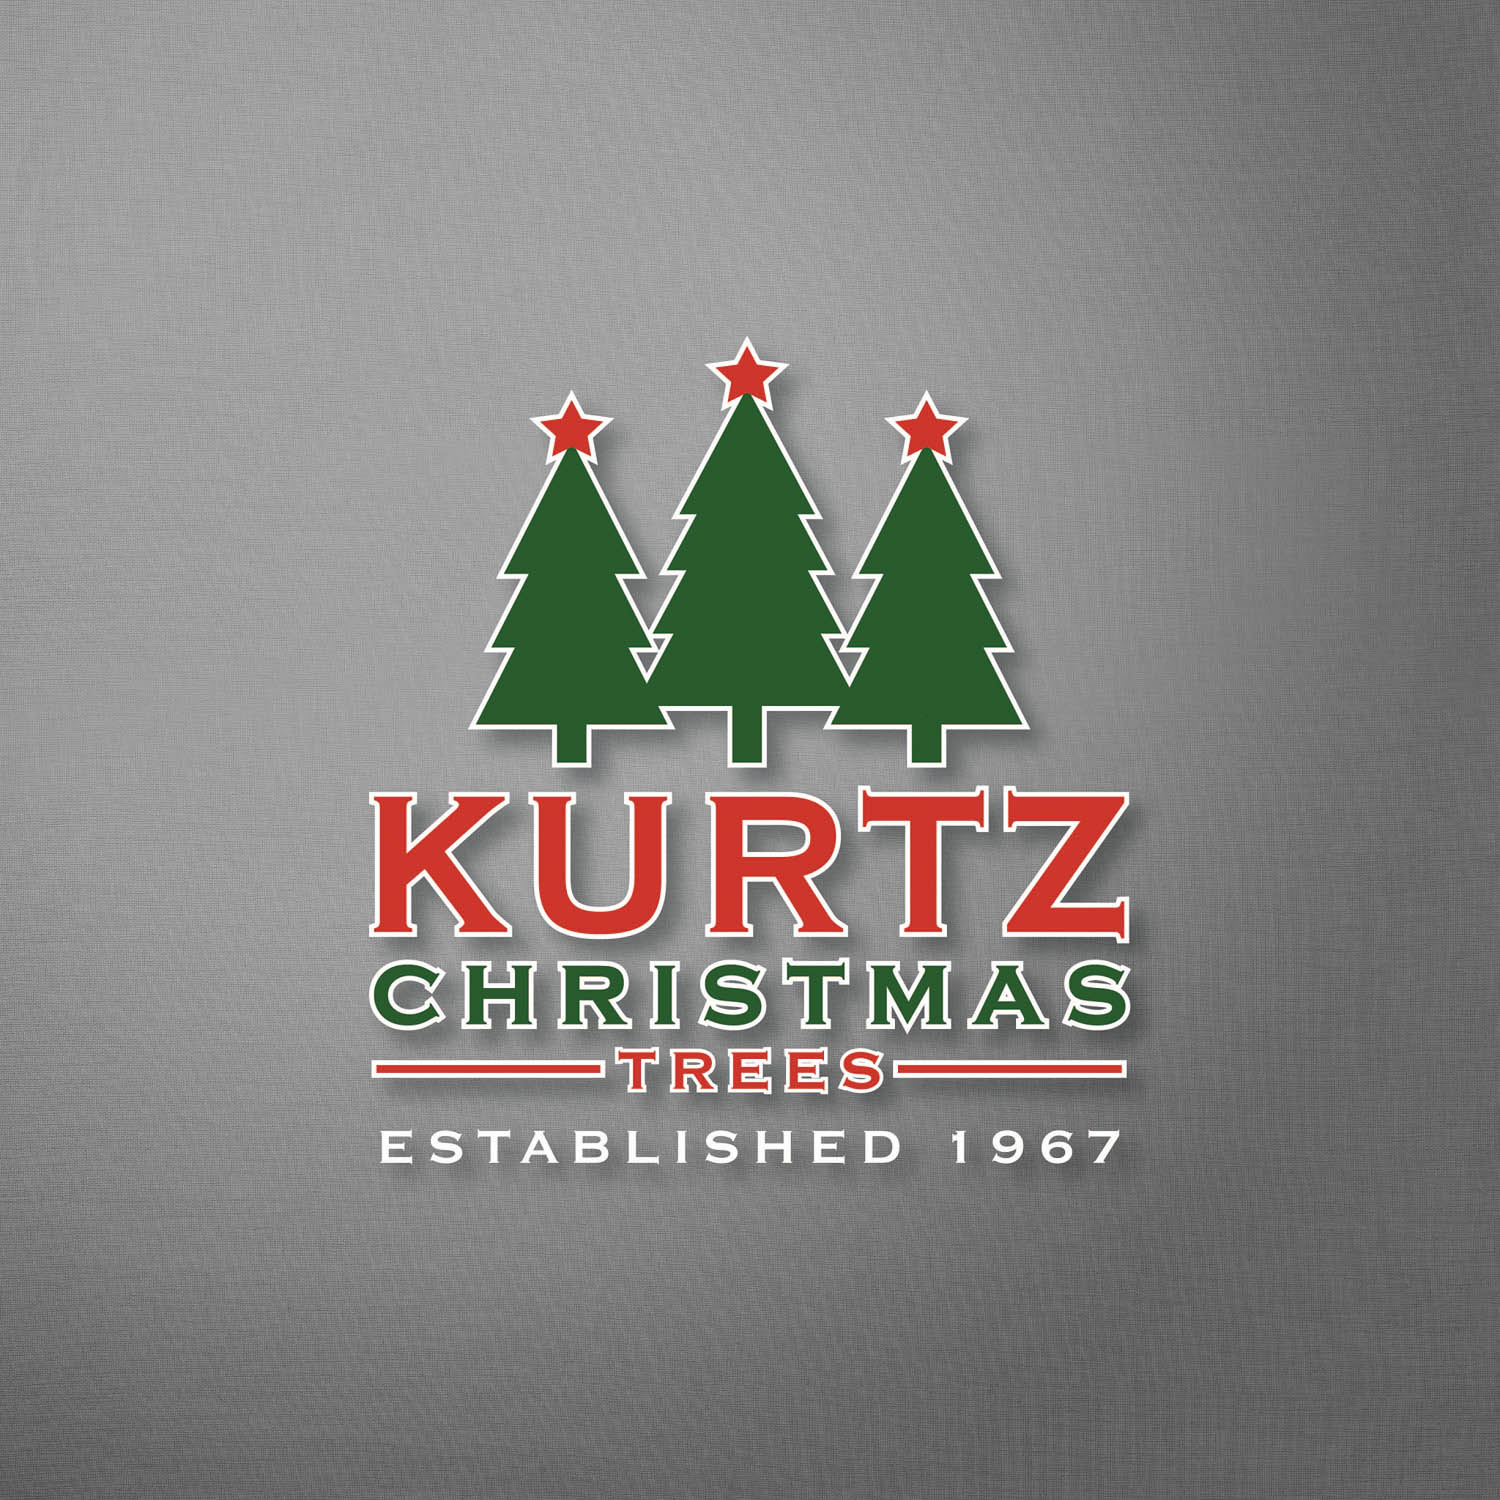 10 - kurtz christmas trees logo 1.jpg